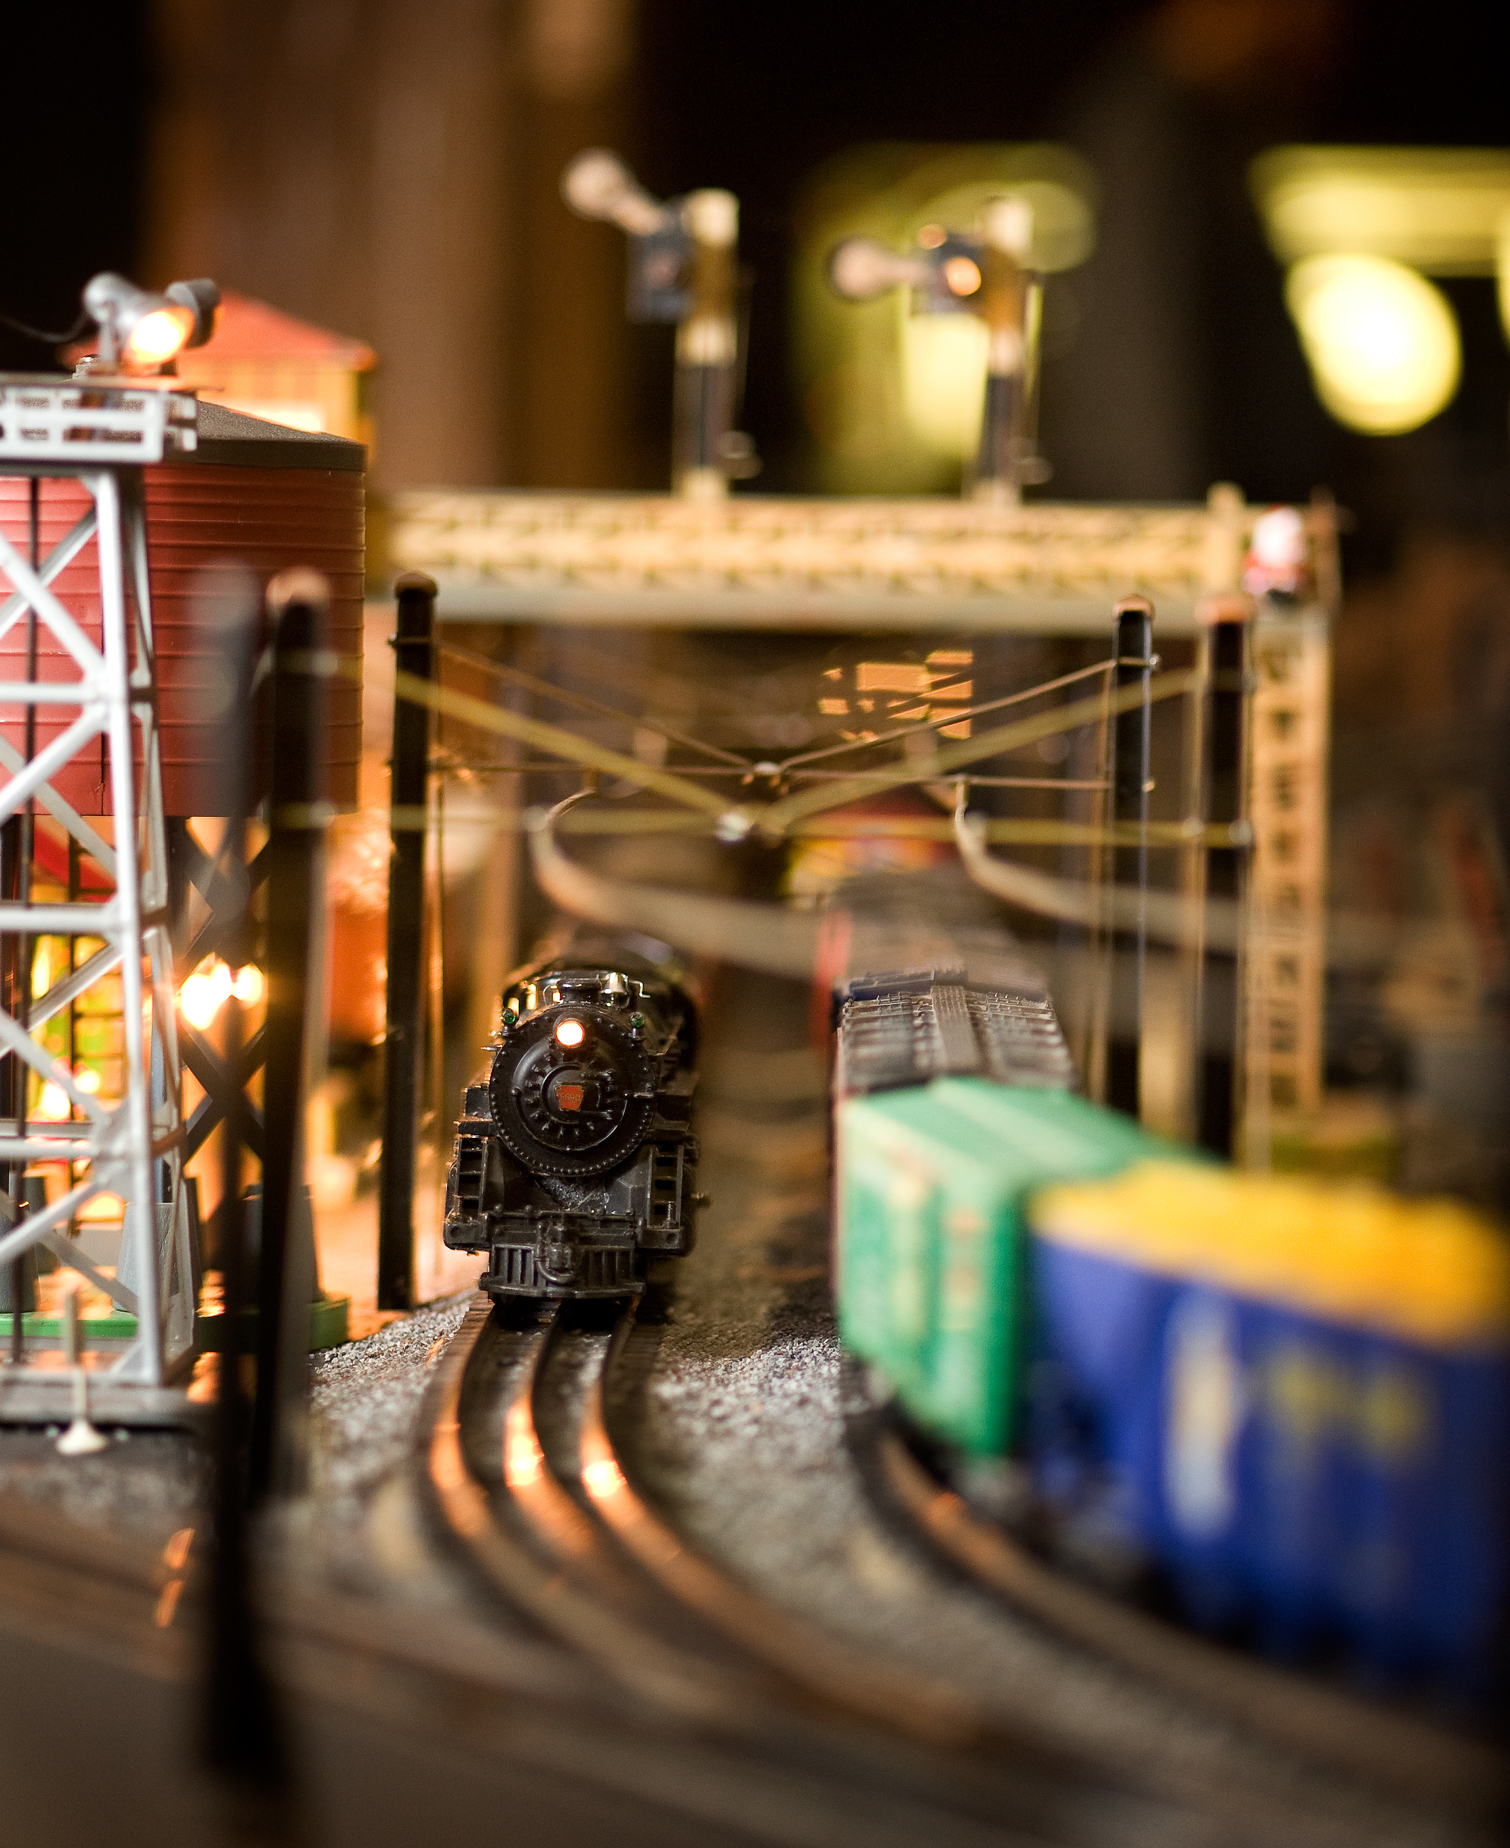 Brandywine Railroad model train display. Photo credit: Carlos Alejandro